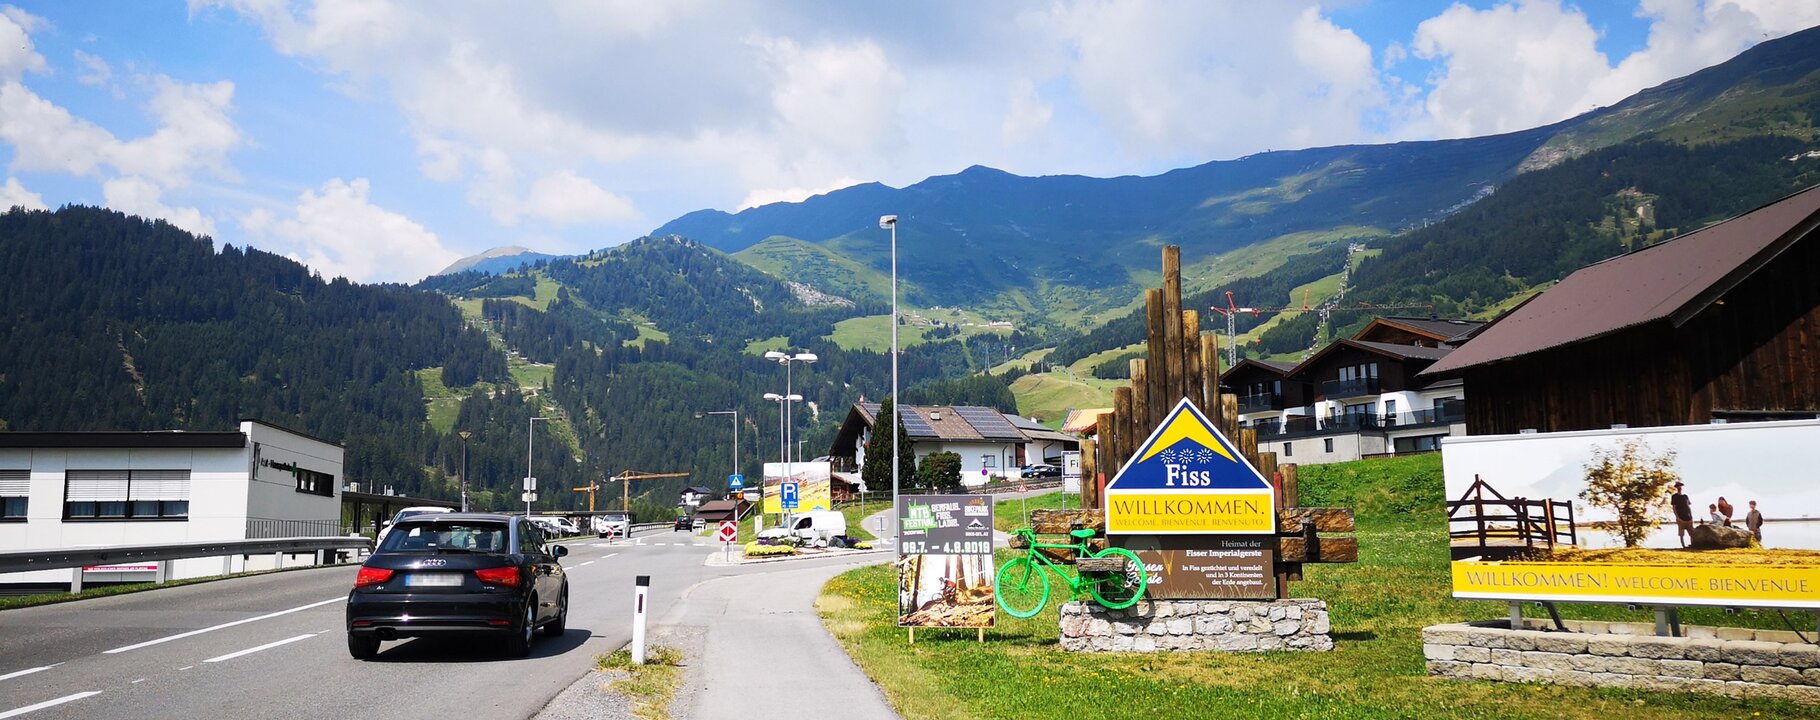 Arrival to Serfaus-Fiss-Ladis in Tyrol Austria | © Serfaus-Fiss-Ladis